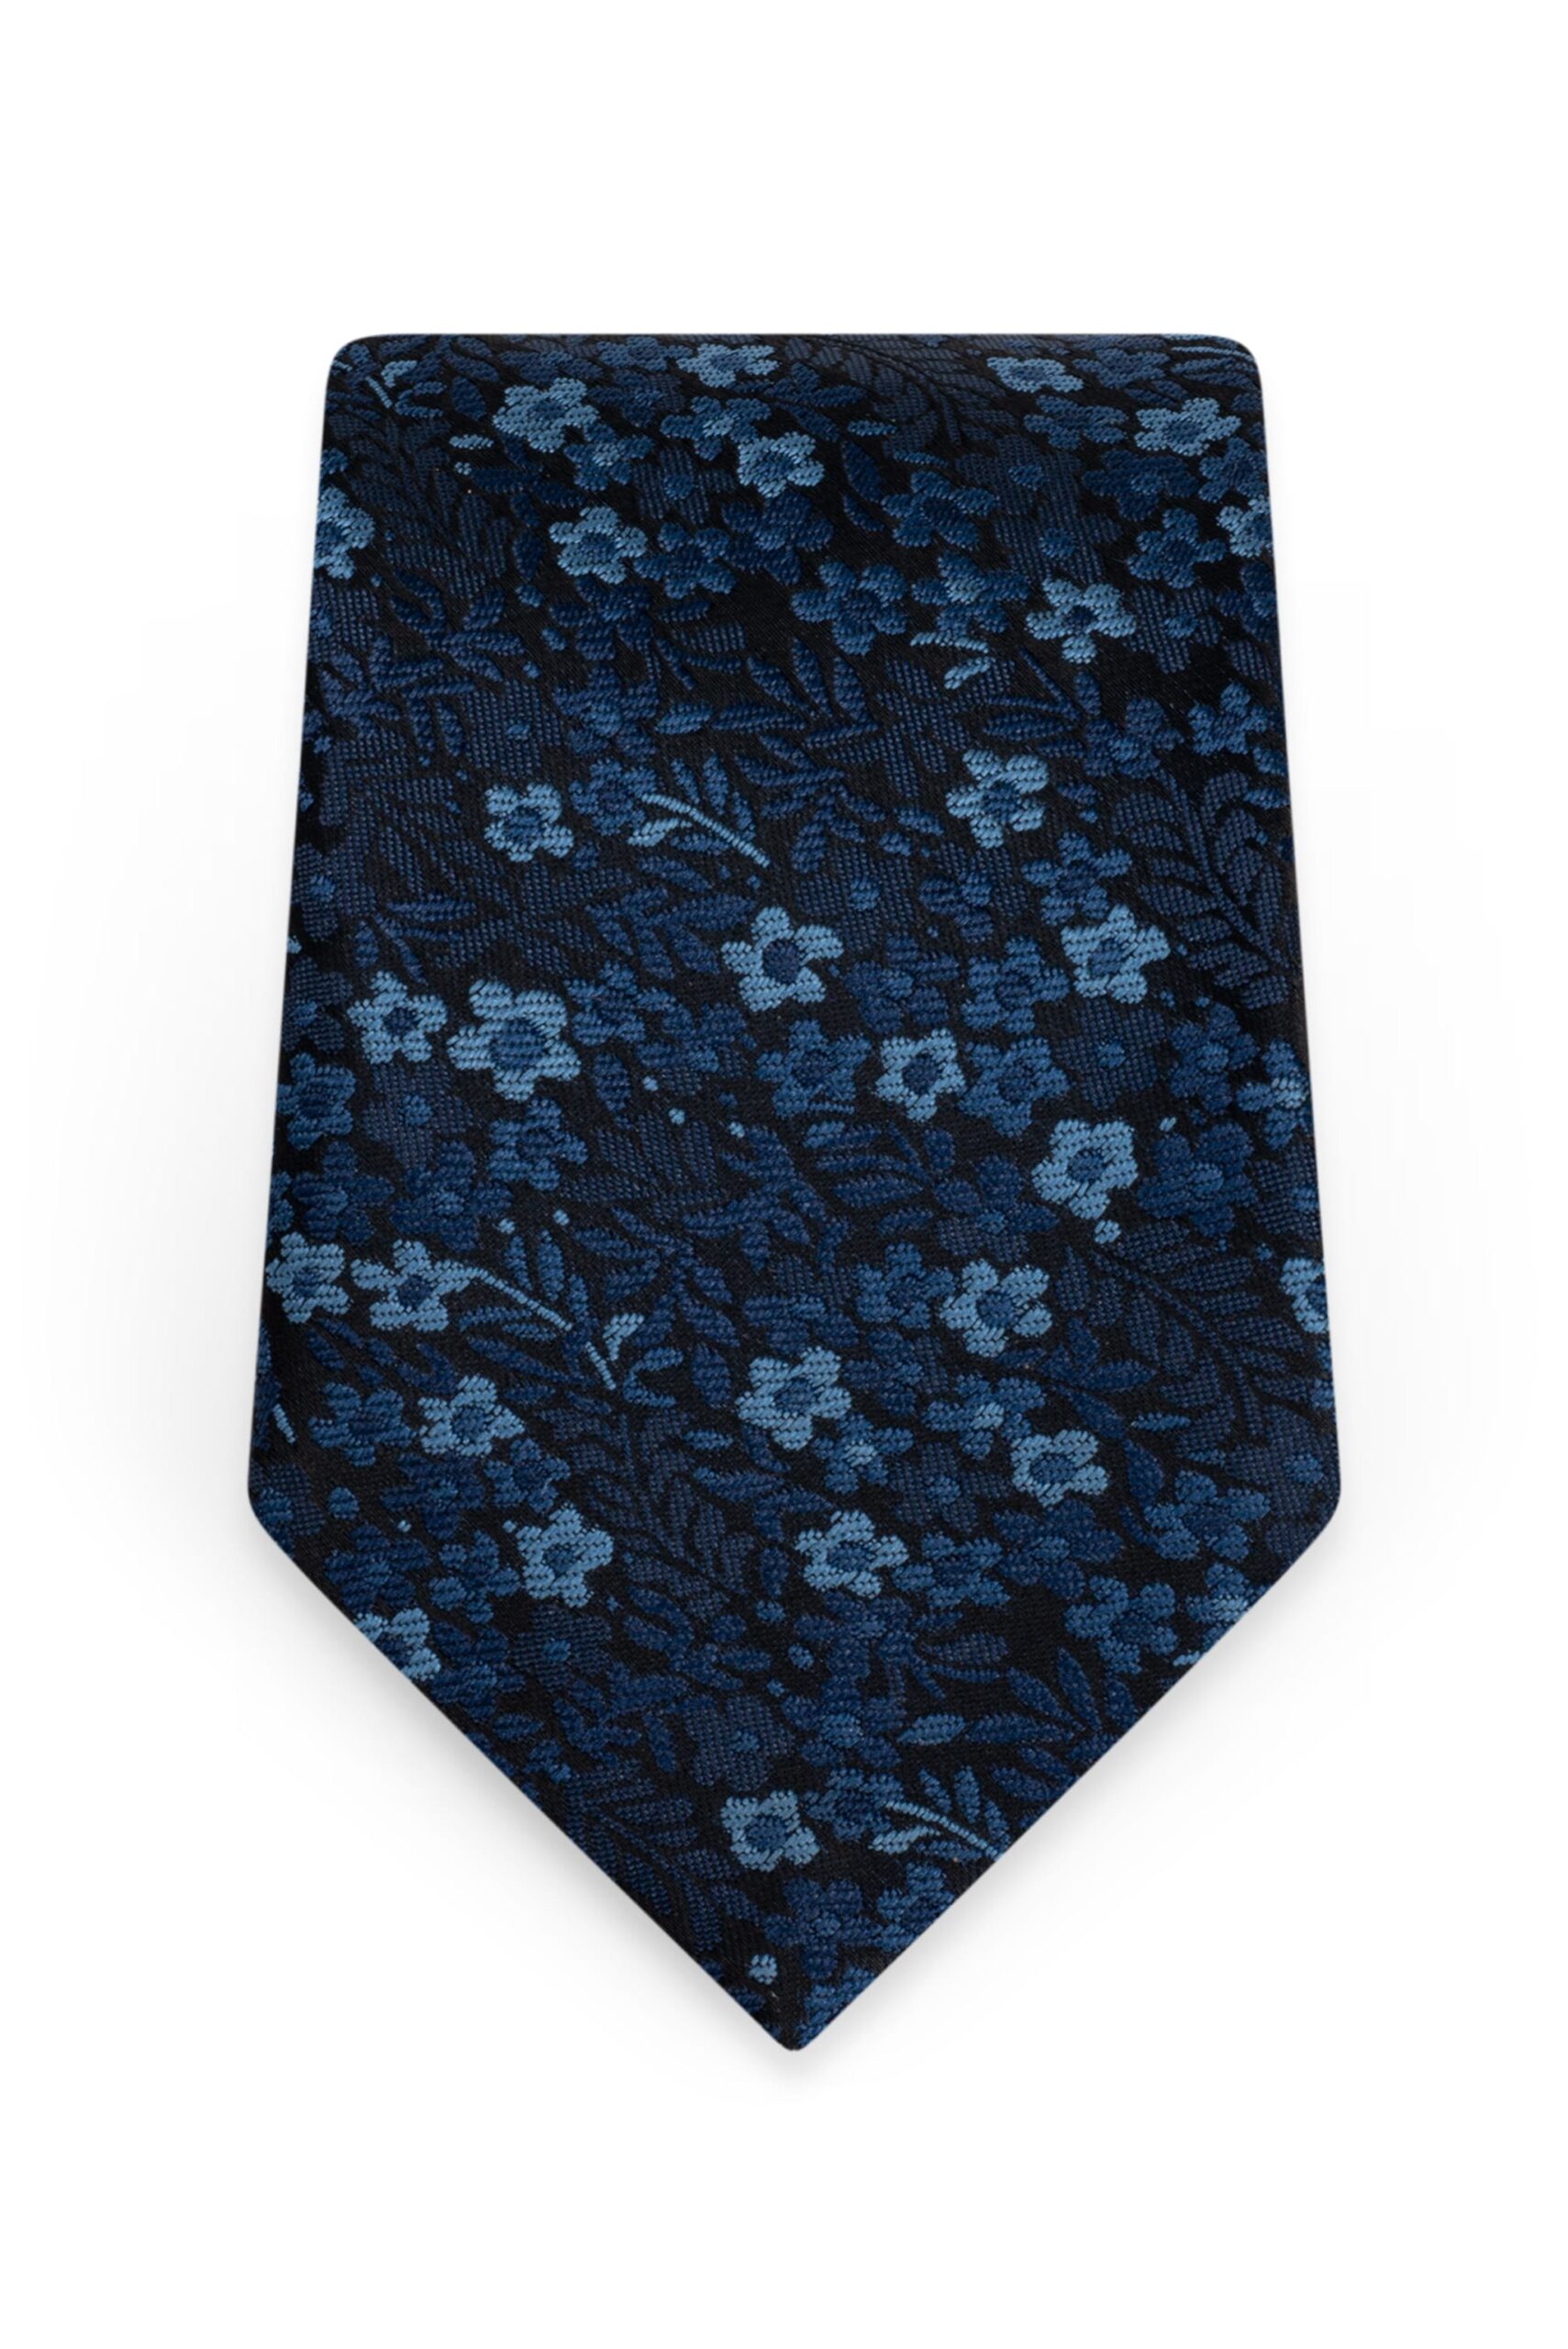 Floral Navy Self-Tie Windsor Tie 1